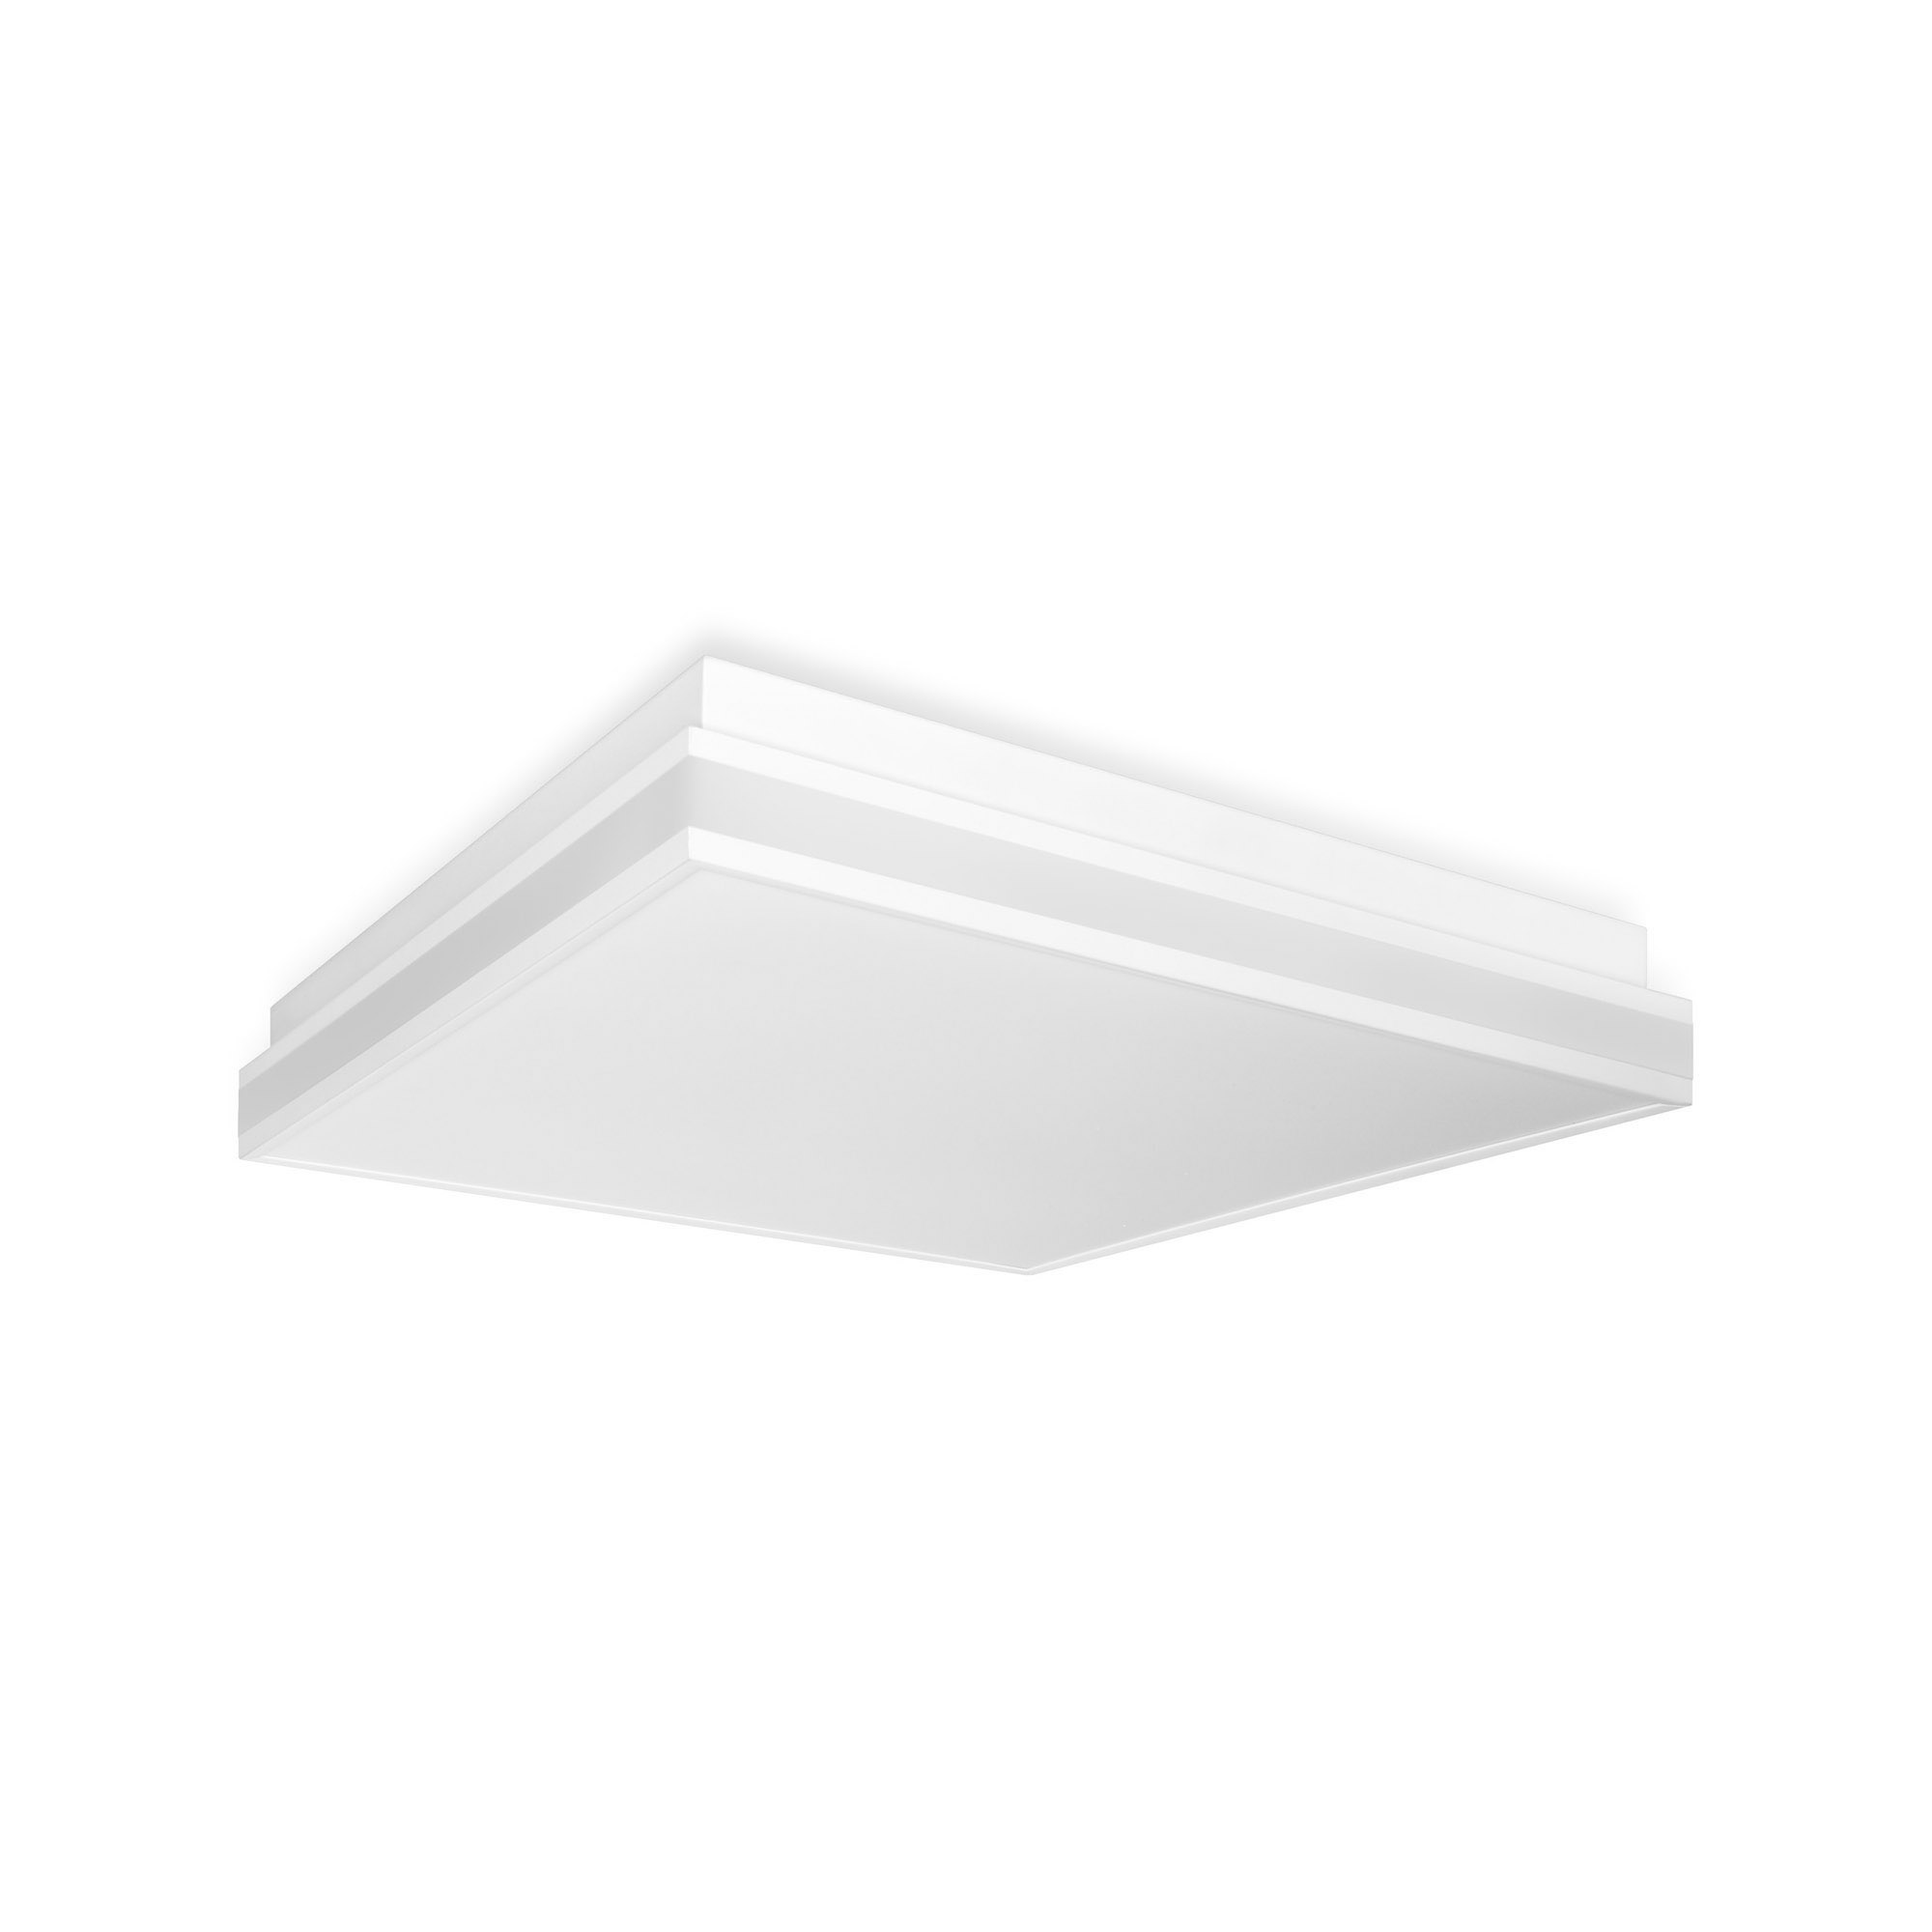 LEDVANCE SMART+ WiFi Tunable White LED Ceiling Light ORBIS MAGNET 450x450mm white 4200lm